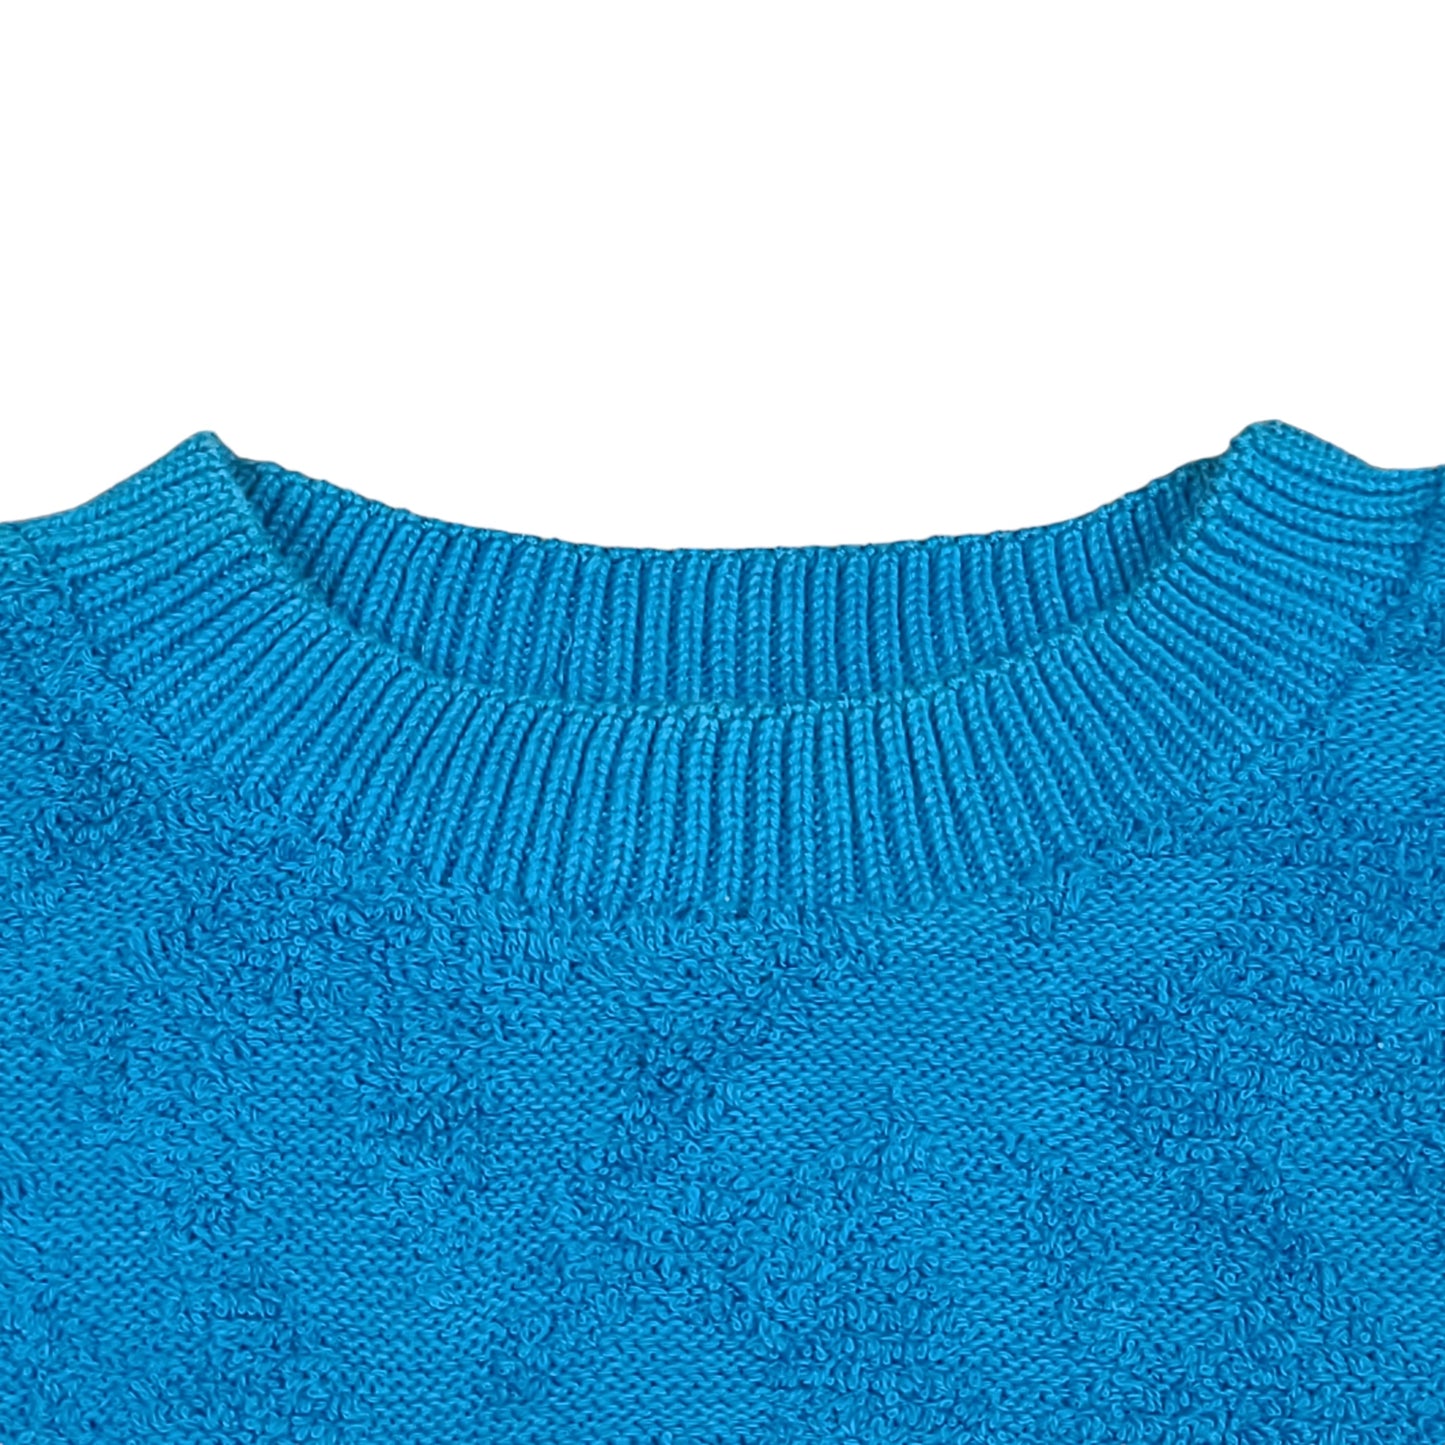 I.Magnin Blue Knit Sweater